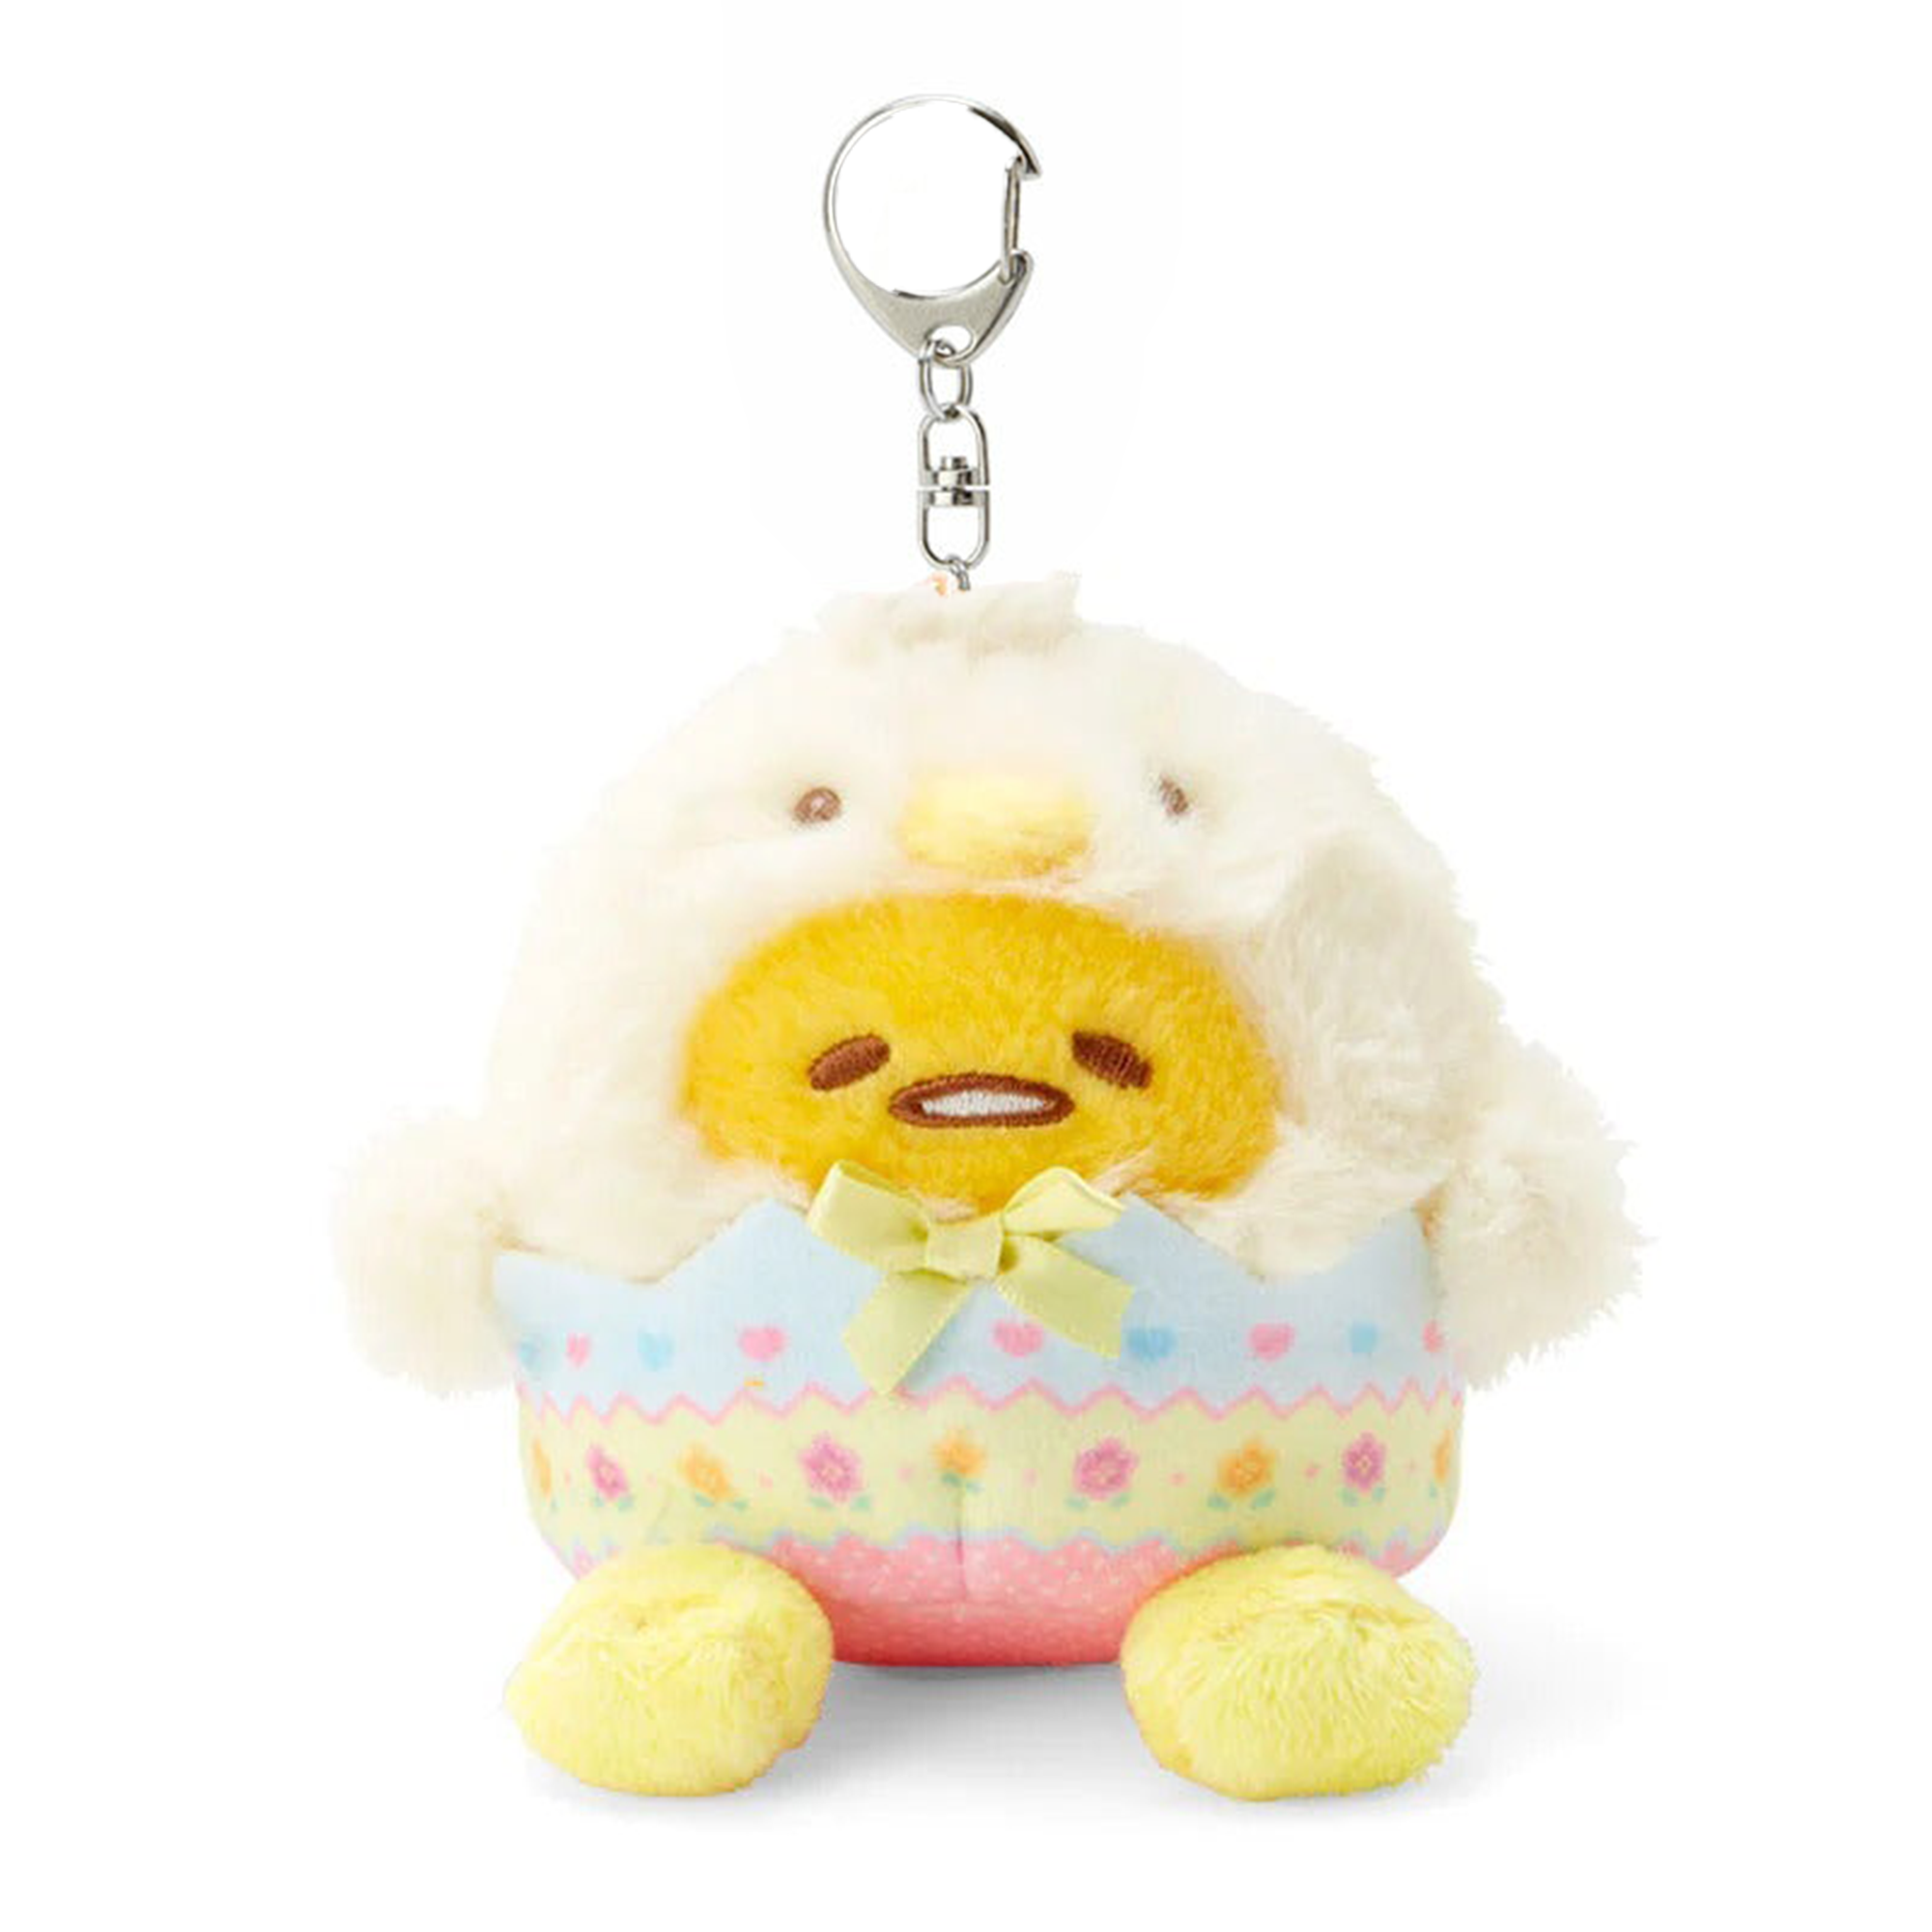 Gudetama Baby Chick Mascot Plush Accessory Japan Original   